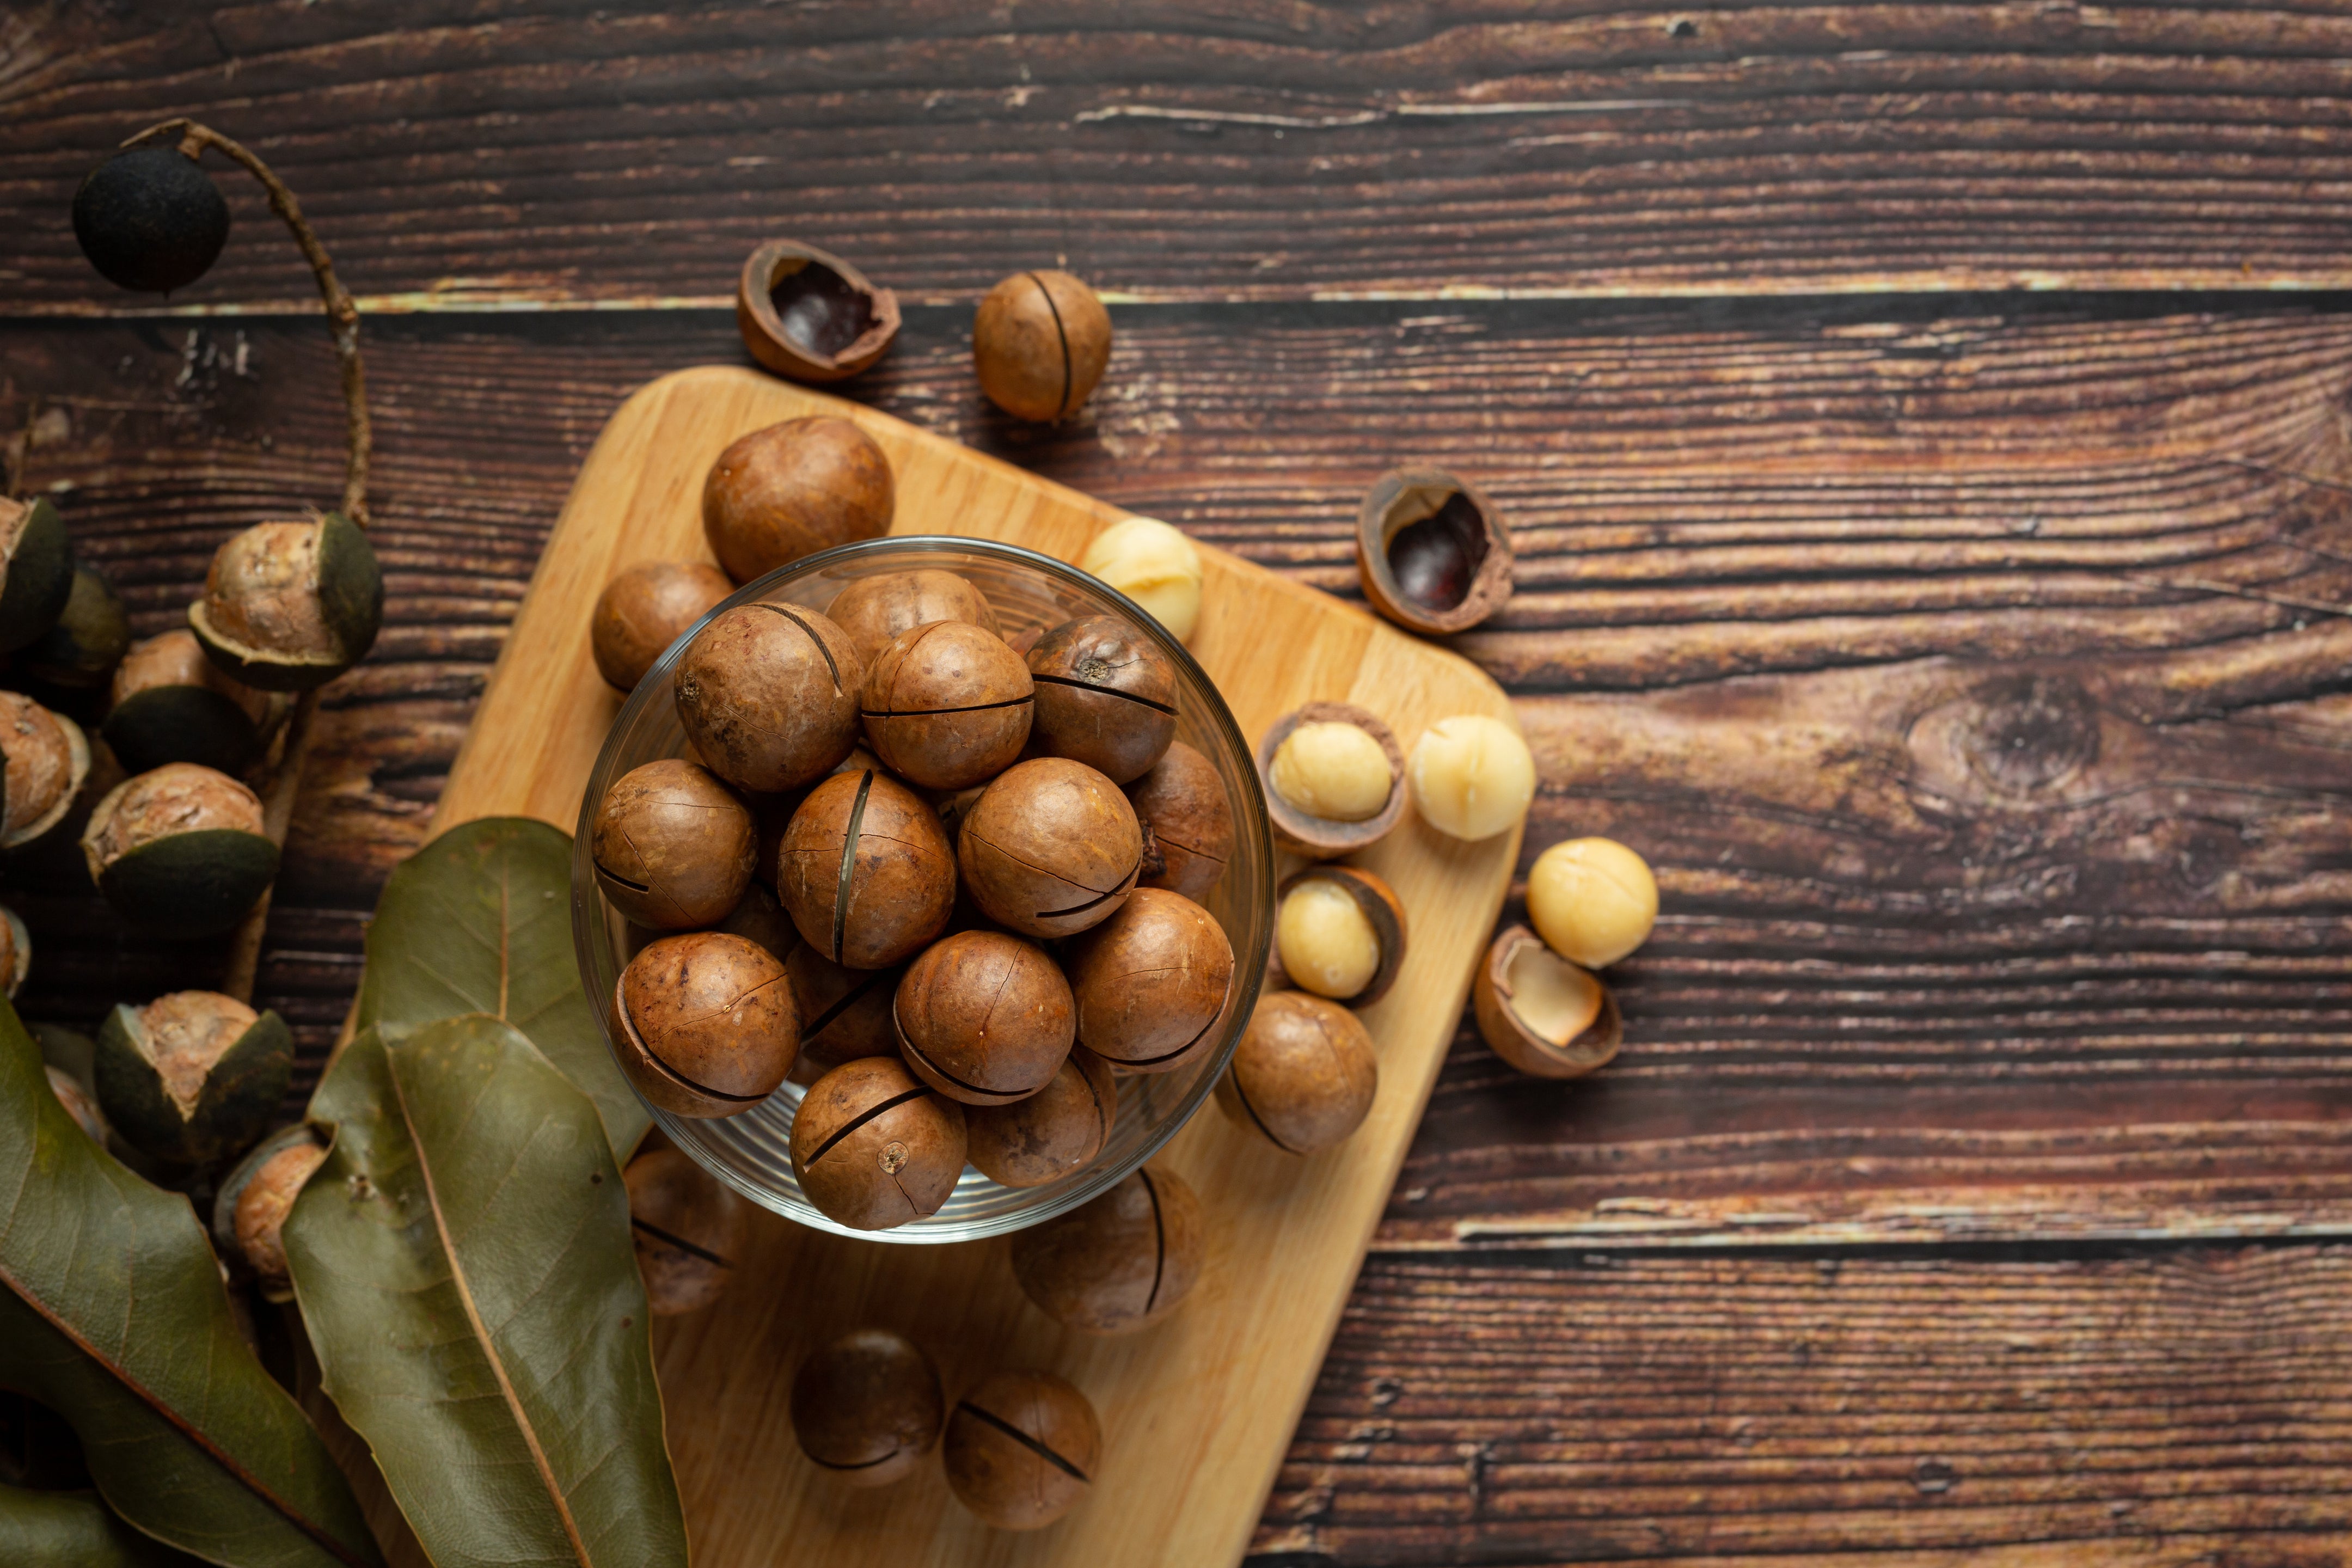 Sugar-free Snacking: The Way Forward - Blog | Macadamia Nuts, Macadamia Nut Bars & More